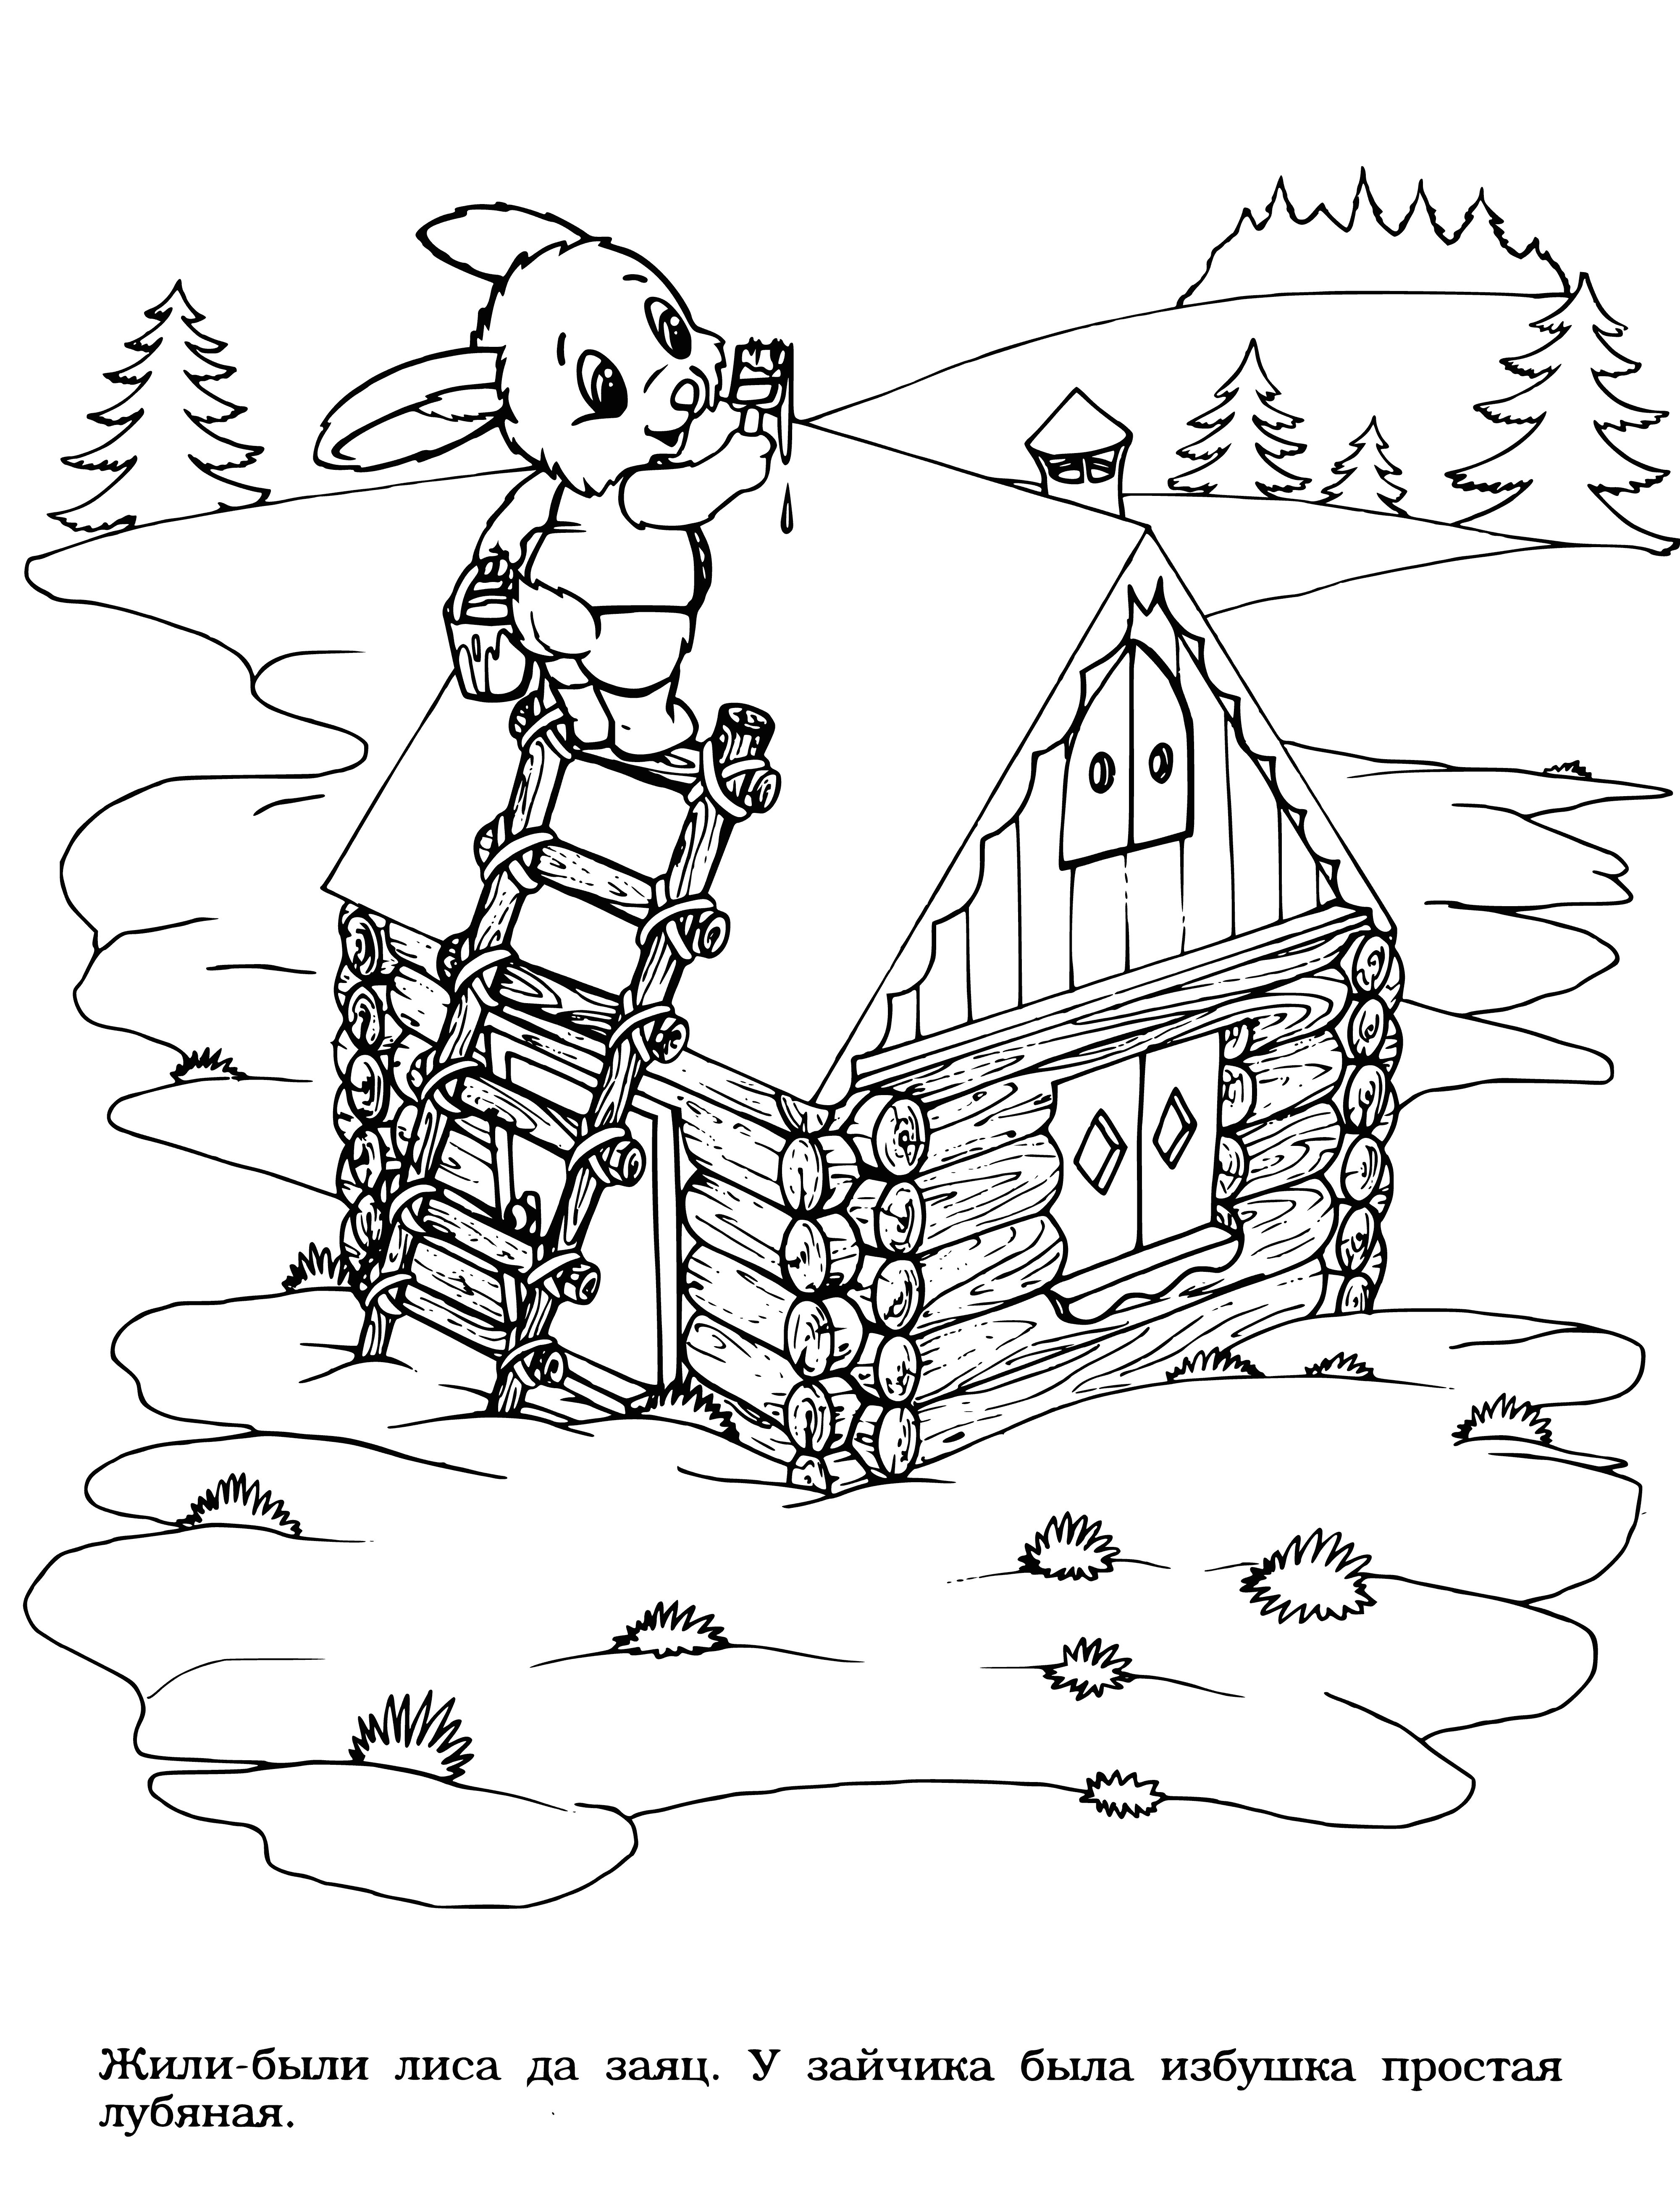 Bunny construit une hutte de raphia coloriage